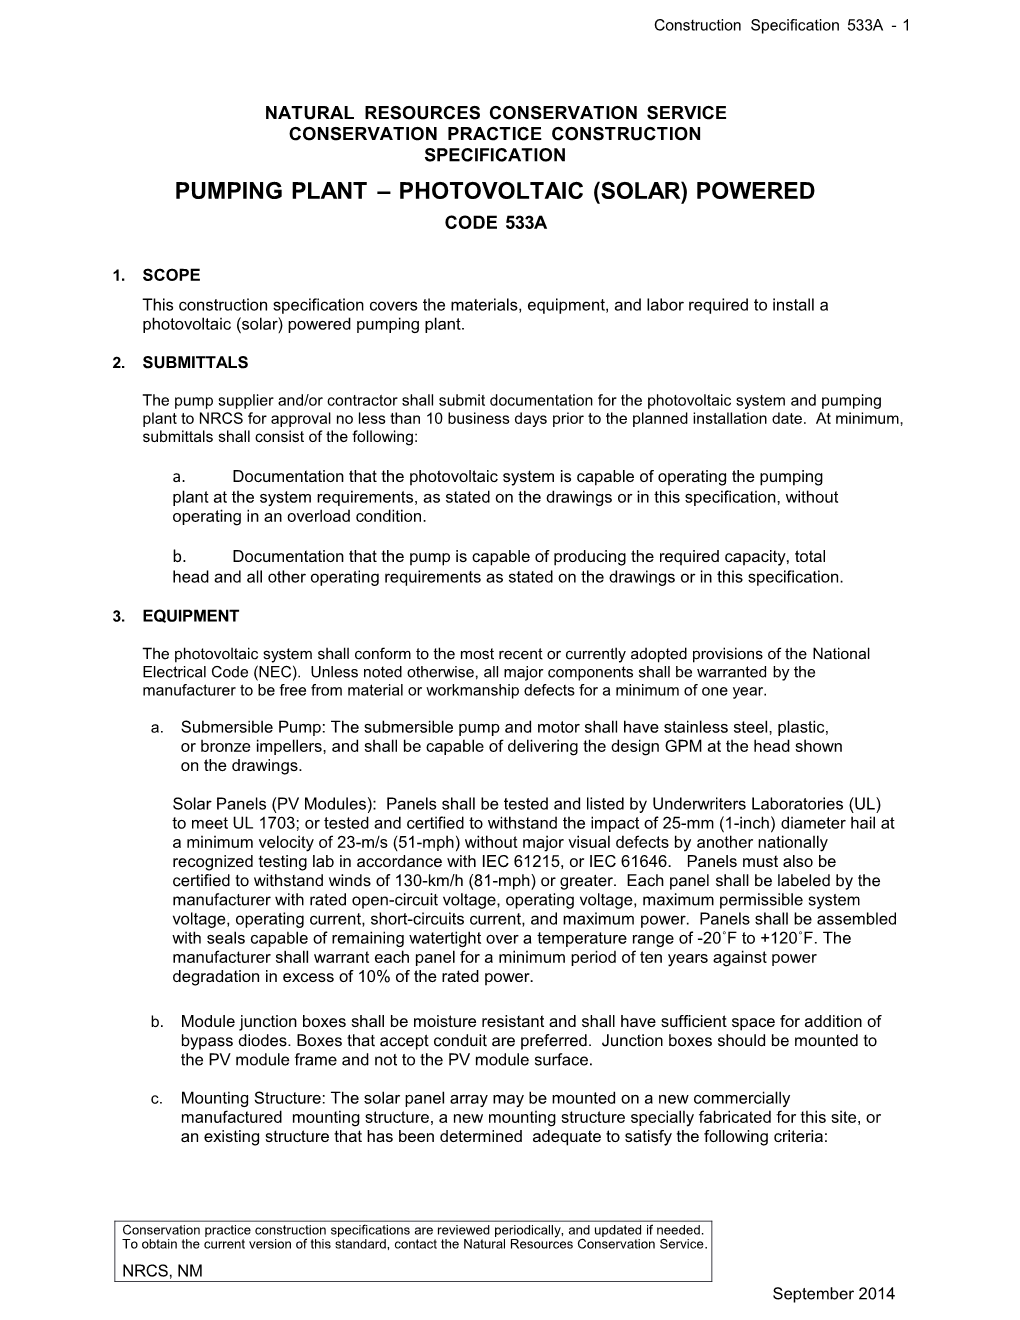 Pumpingplant Photovoltaic(Solar)Powered